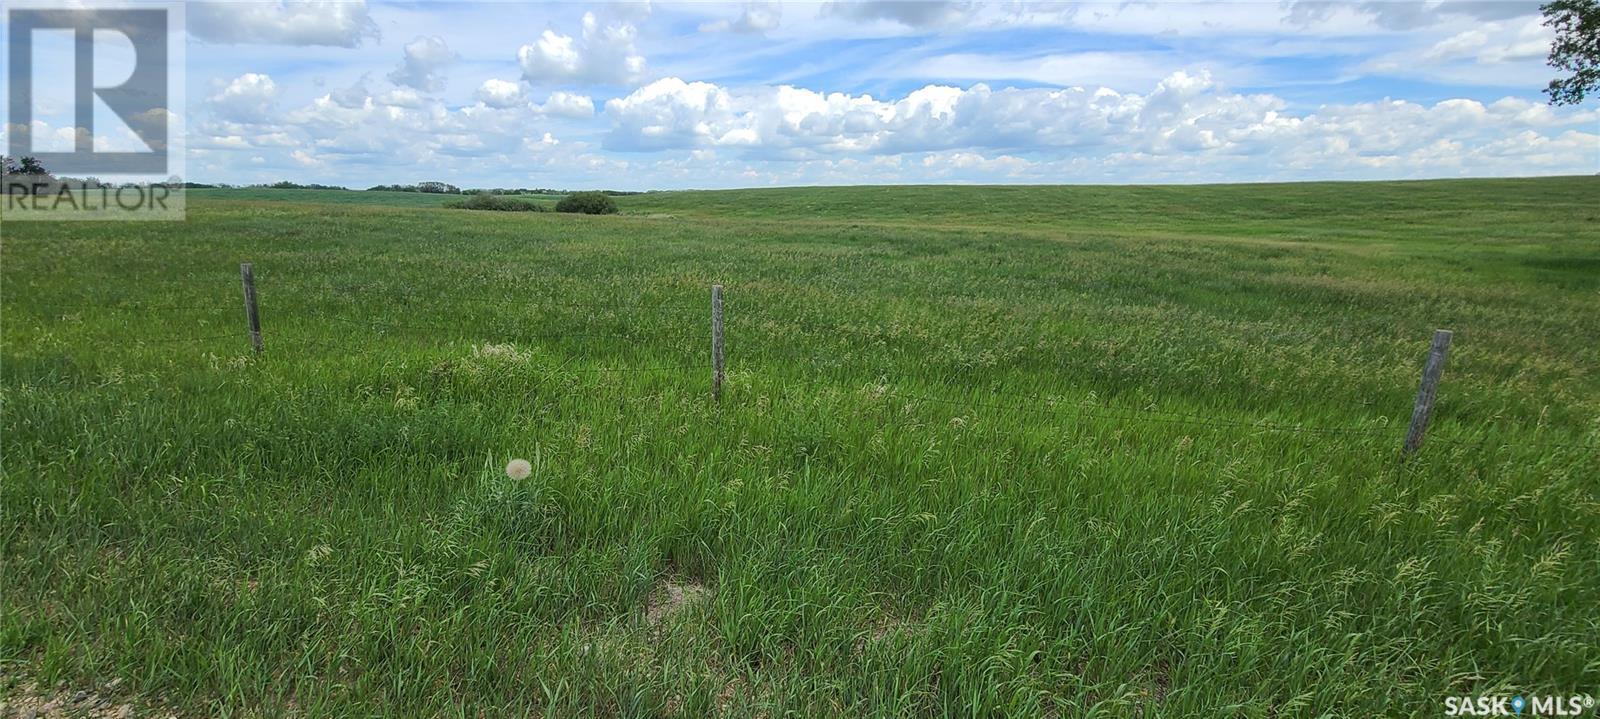 70 Acres Minutes Away NE, corman park rm no. 344, Saskatchewan